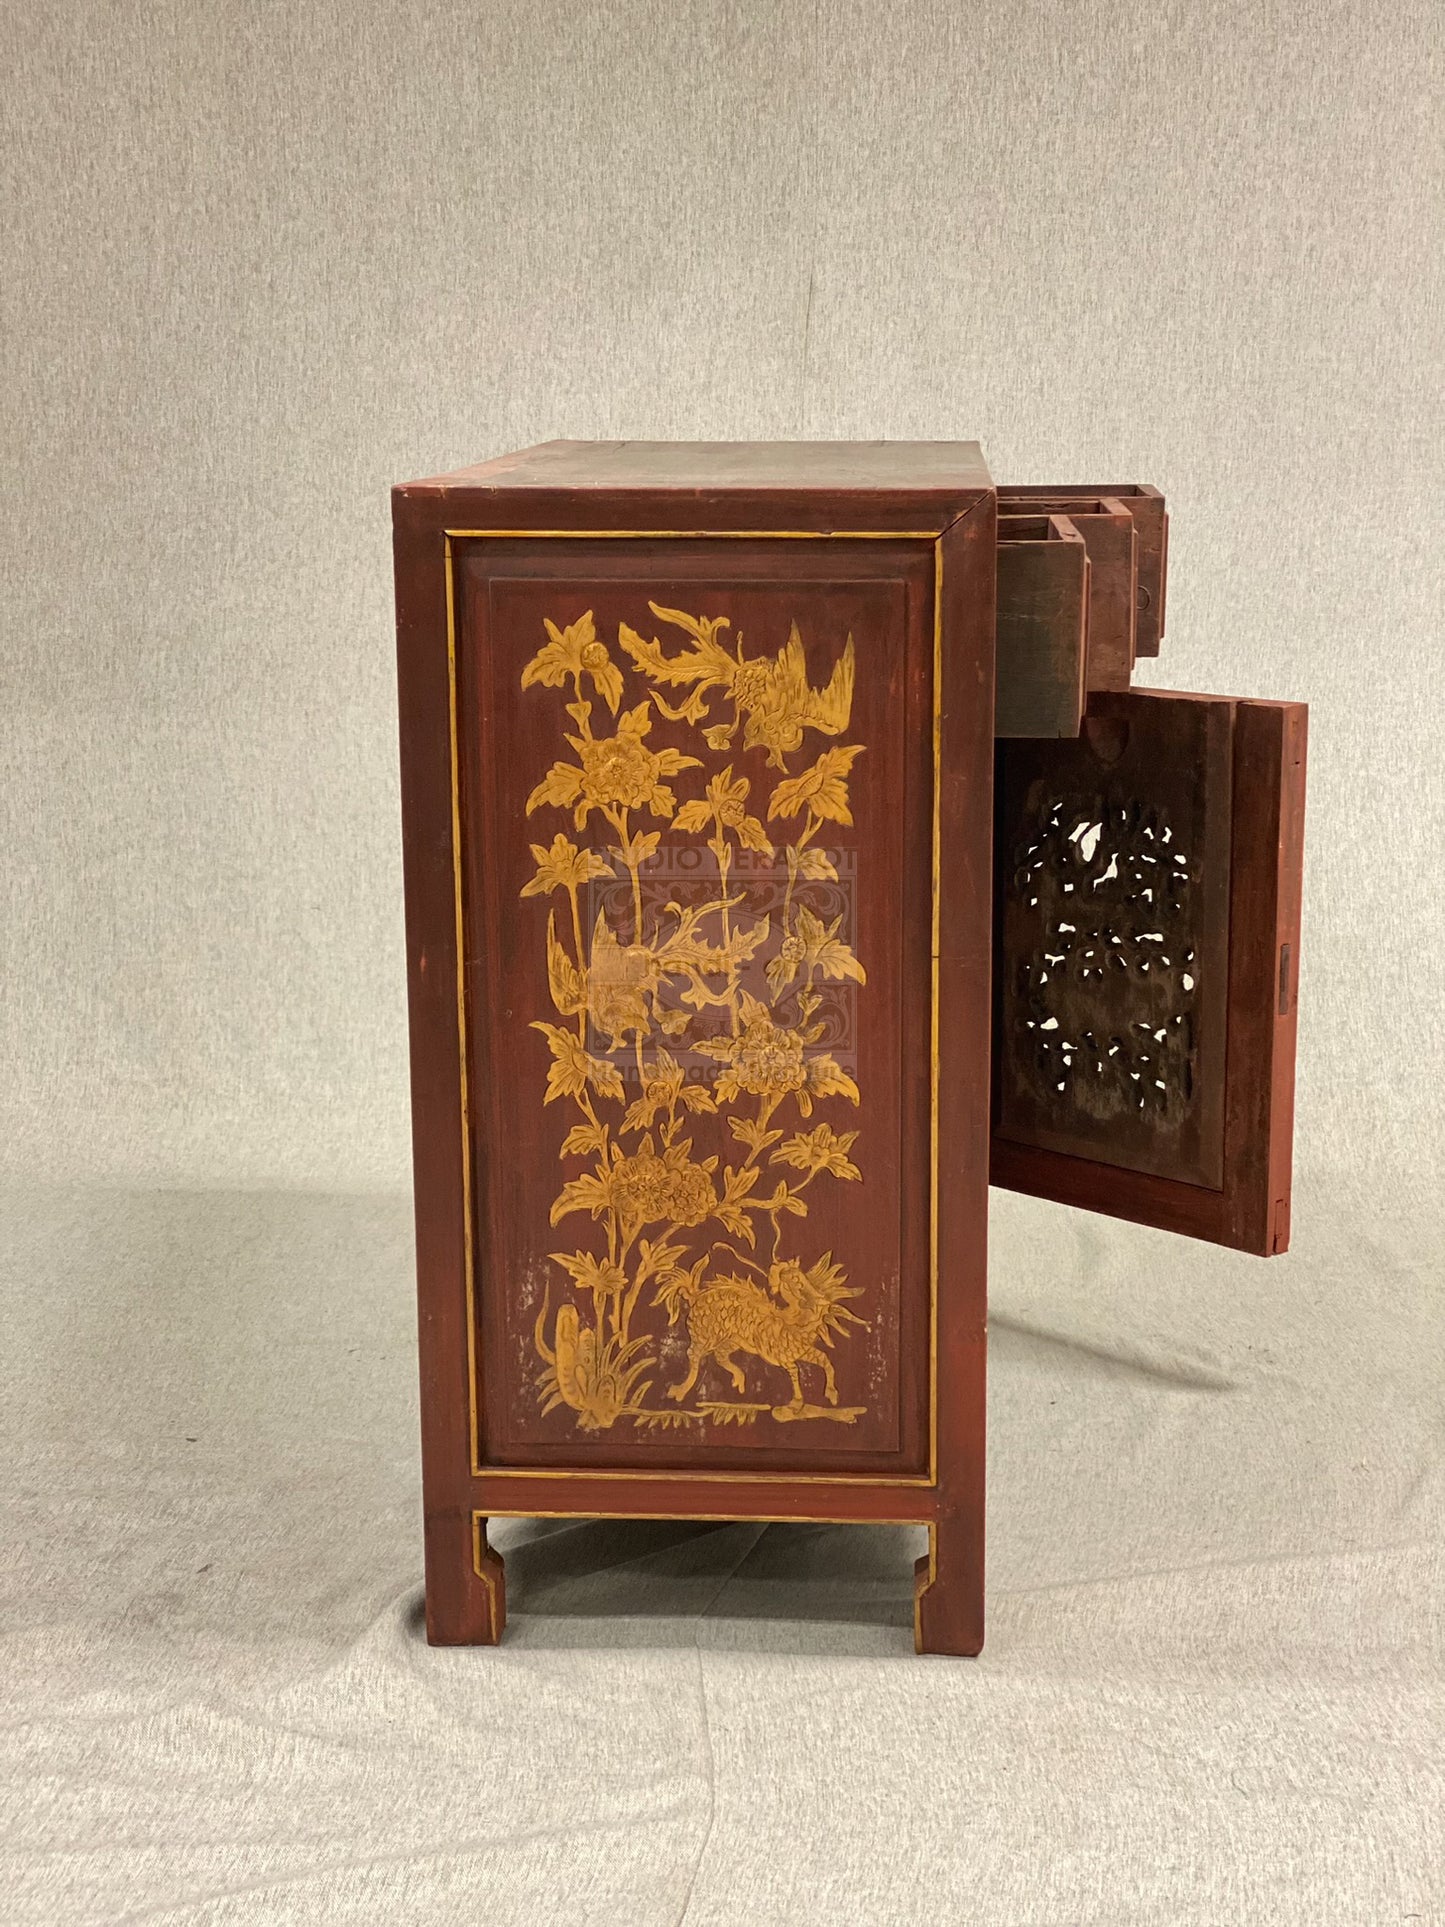 Original China Antique Carving Cabinet